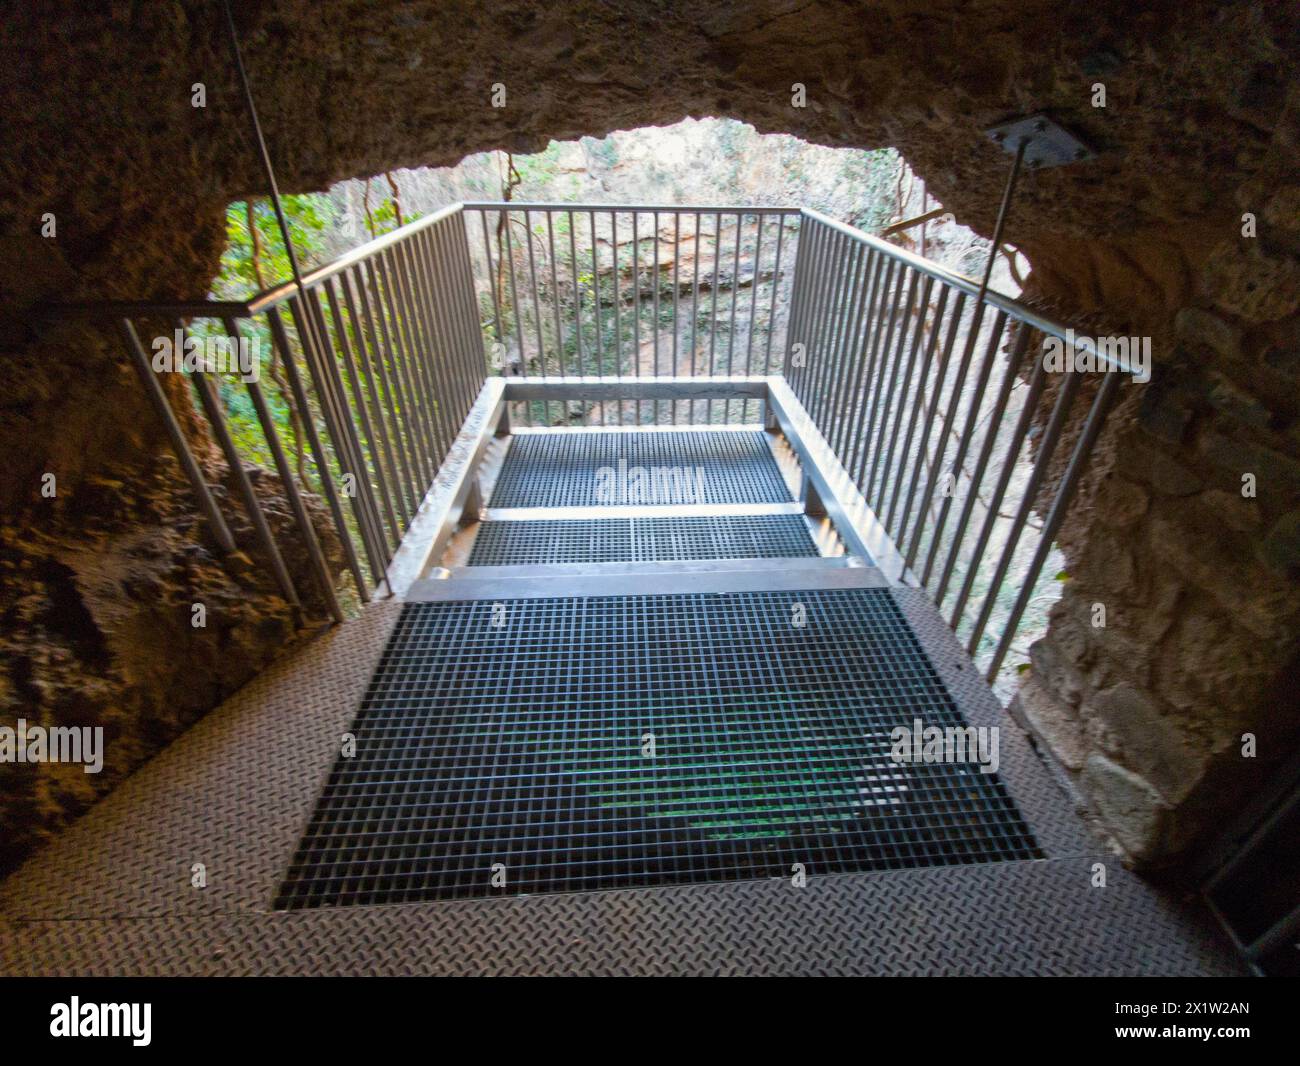 Metal lookout leads through a stone passageway in a cave structure, El Pozo de los Aines, Grisel, Tarazona, Spain Stock Photo